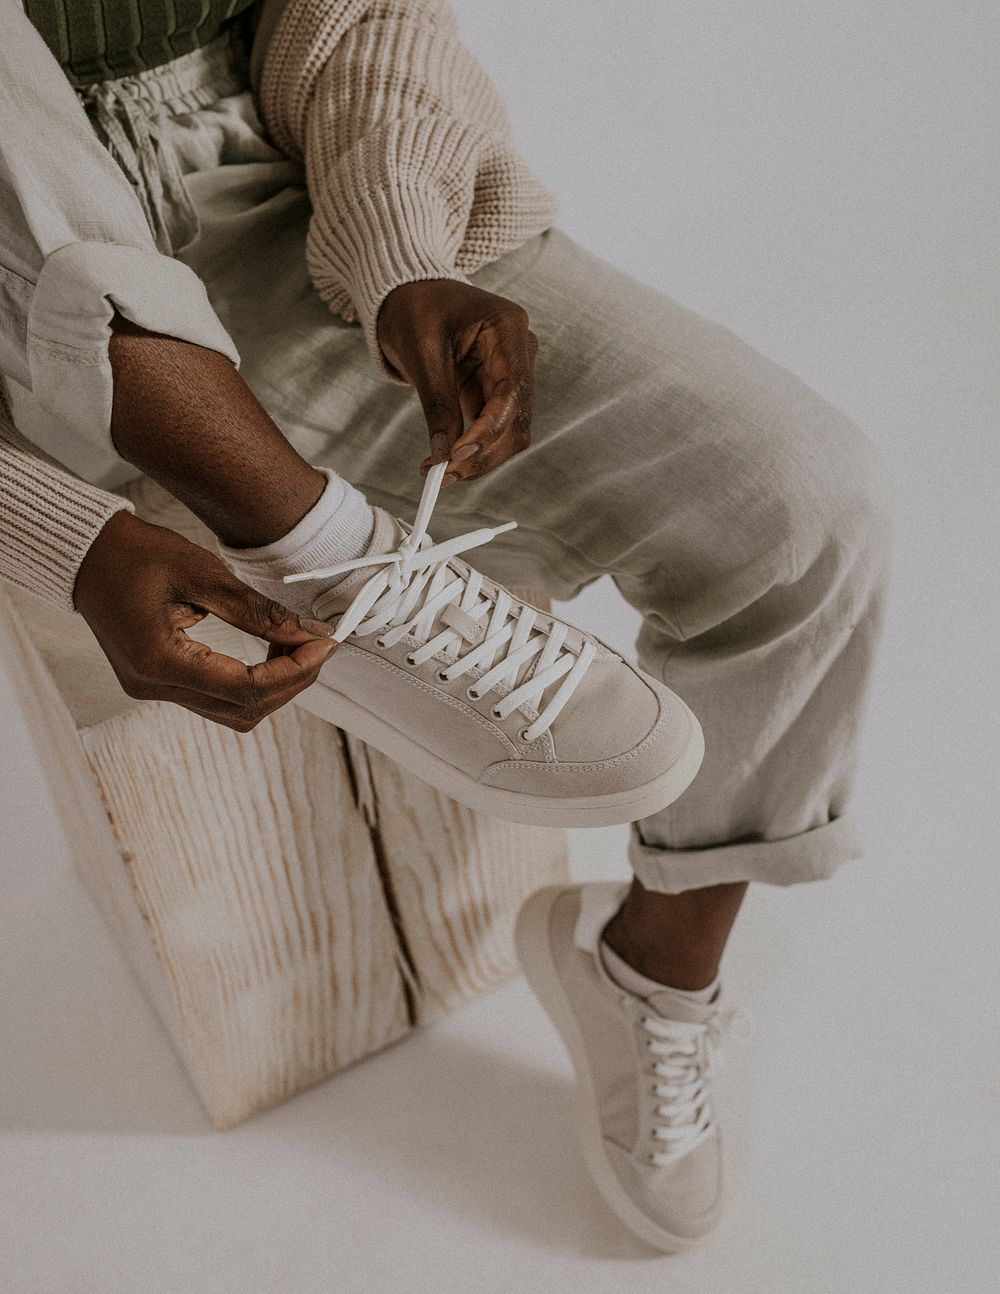 Gray canvas sneakers, minimal fashion